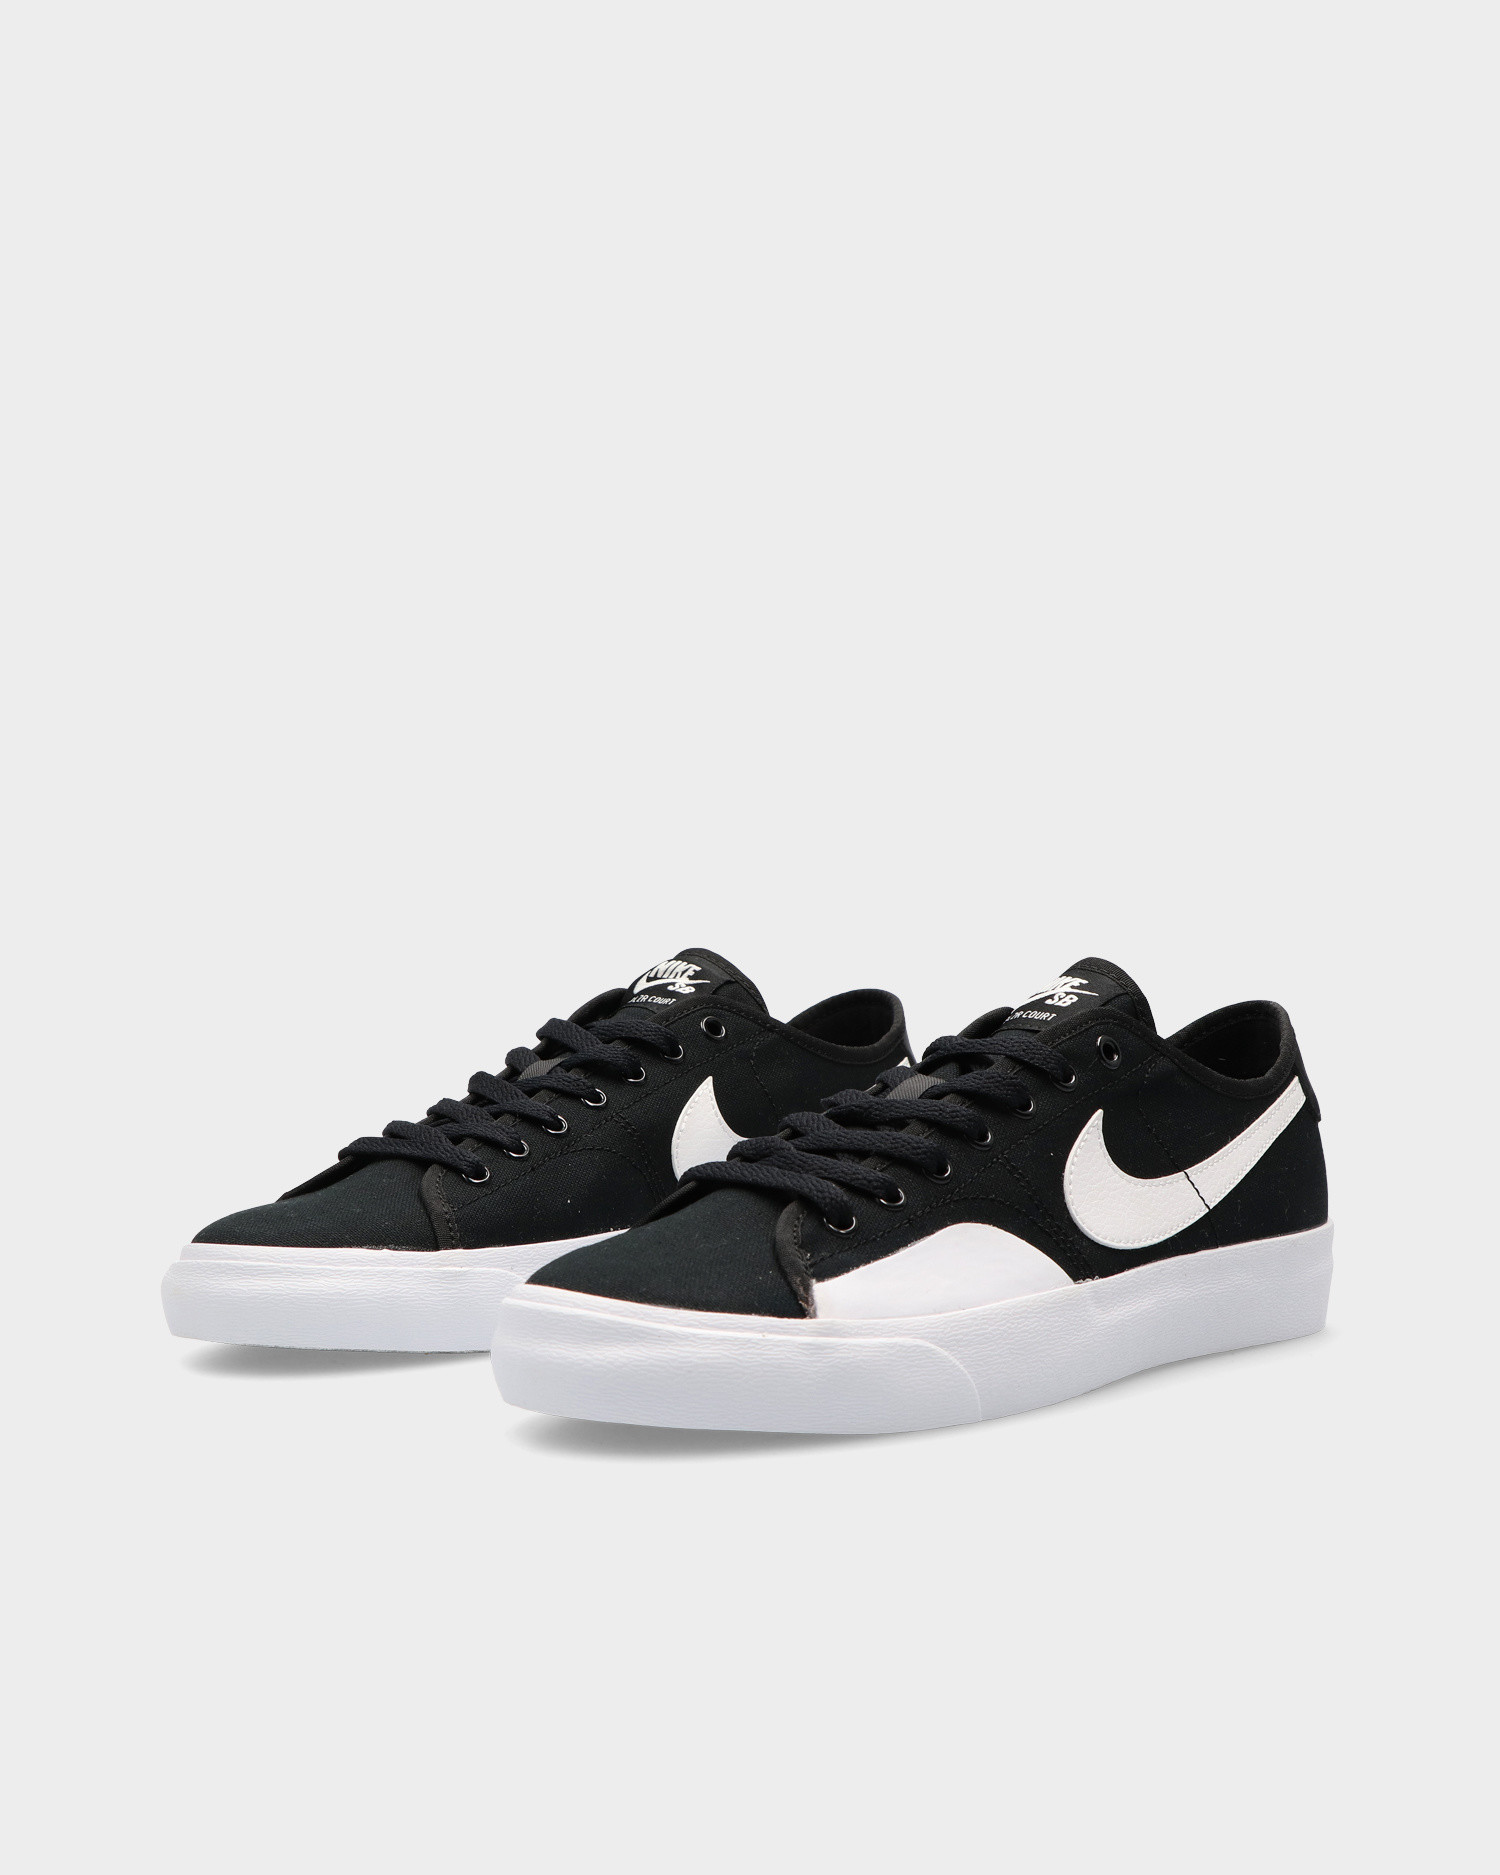 Nike SB Blazer Court Black/White-Black Gum Light Brown